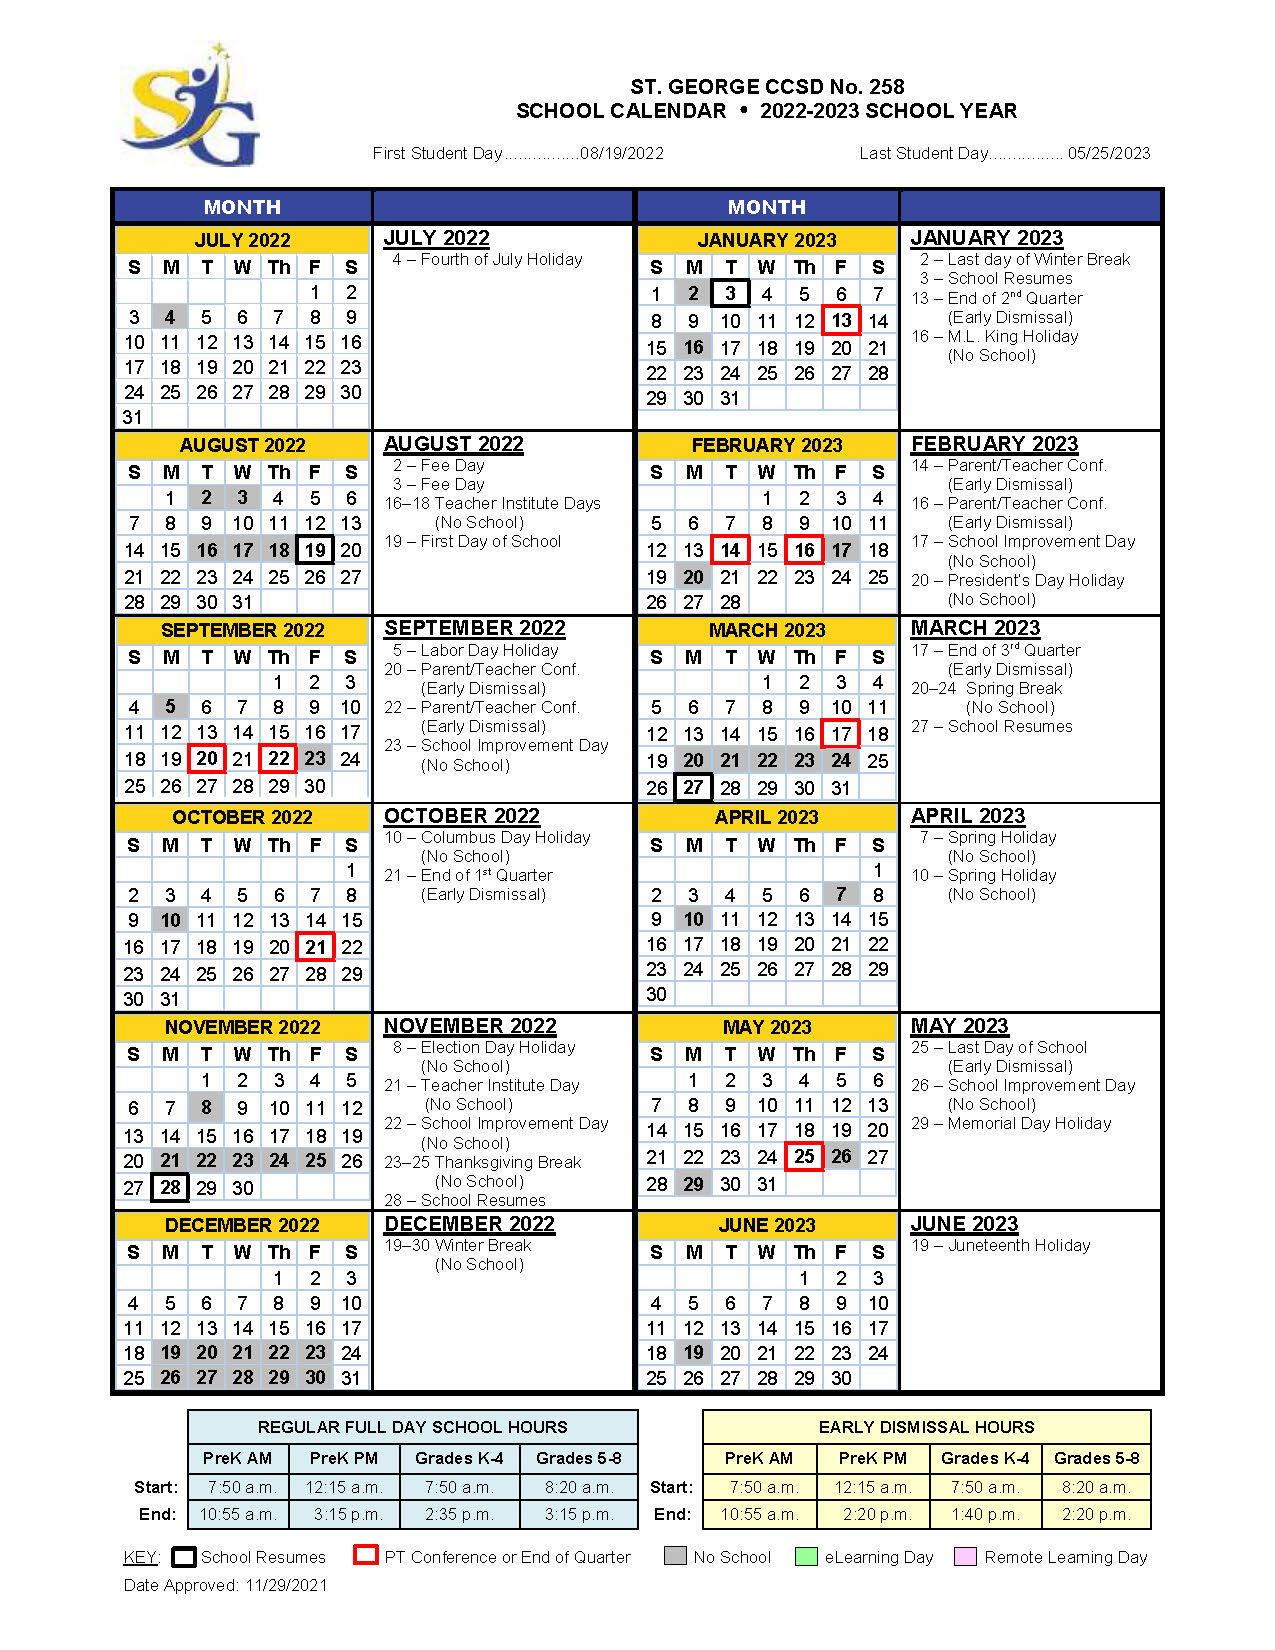 district-calendar-district